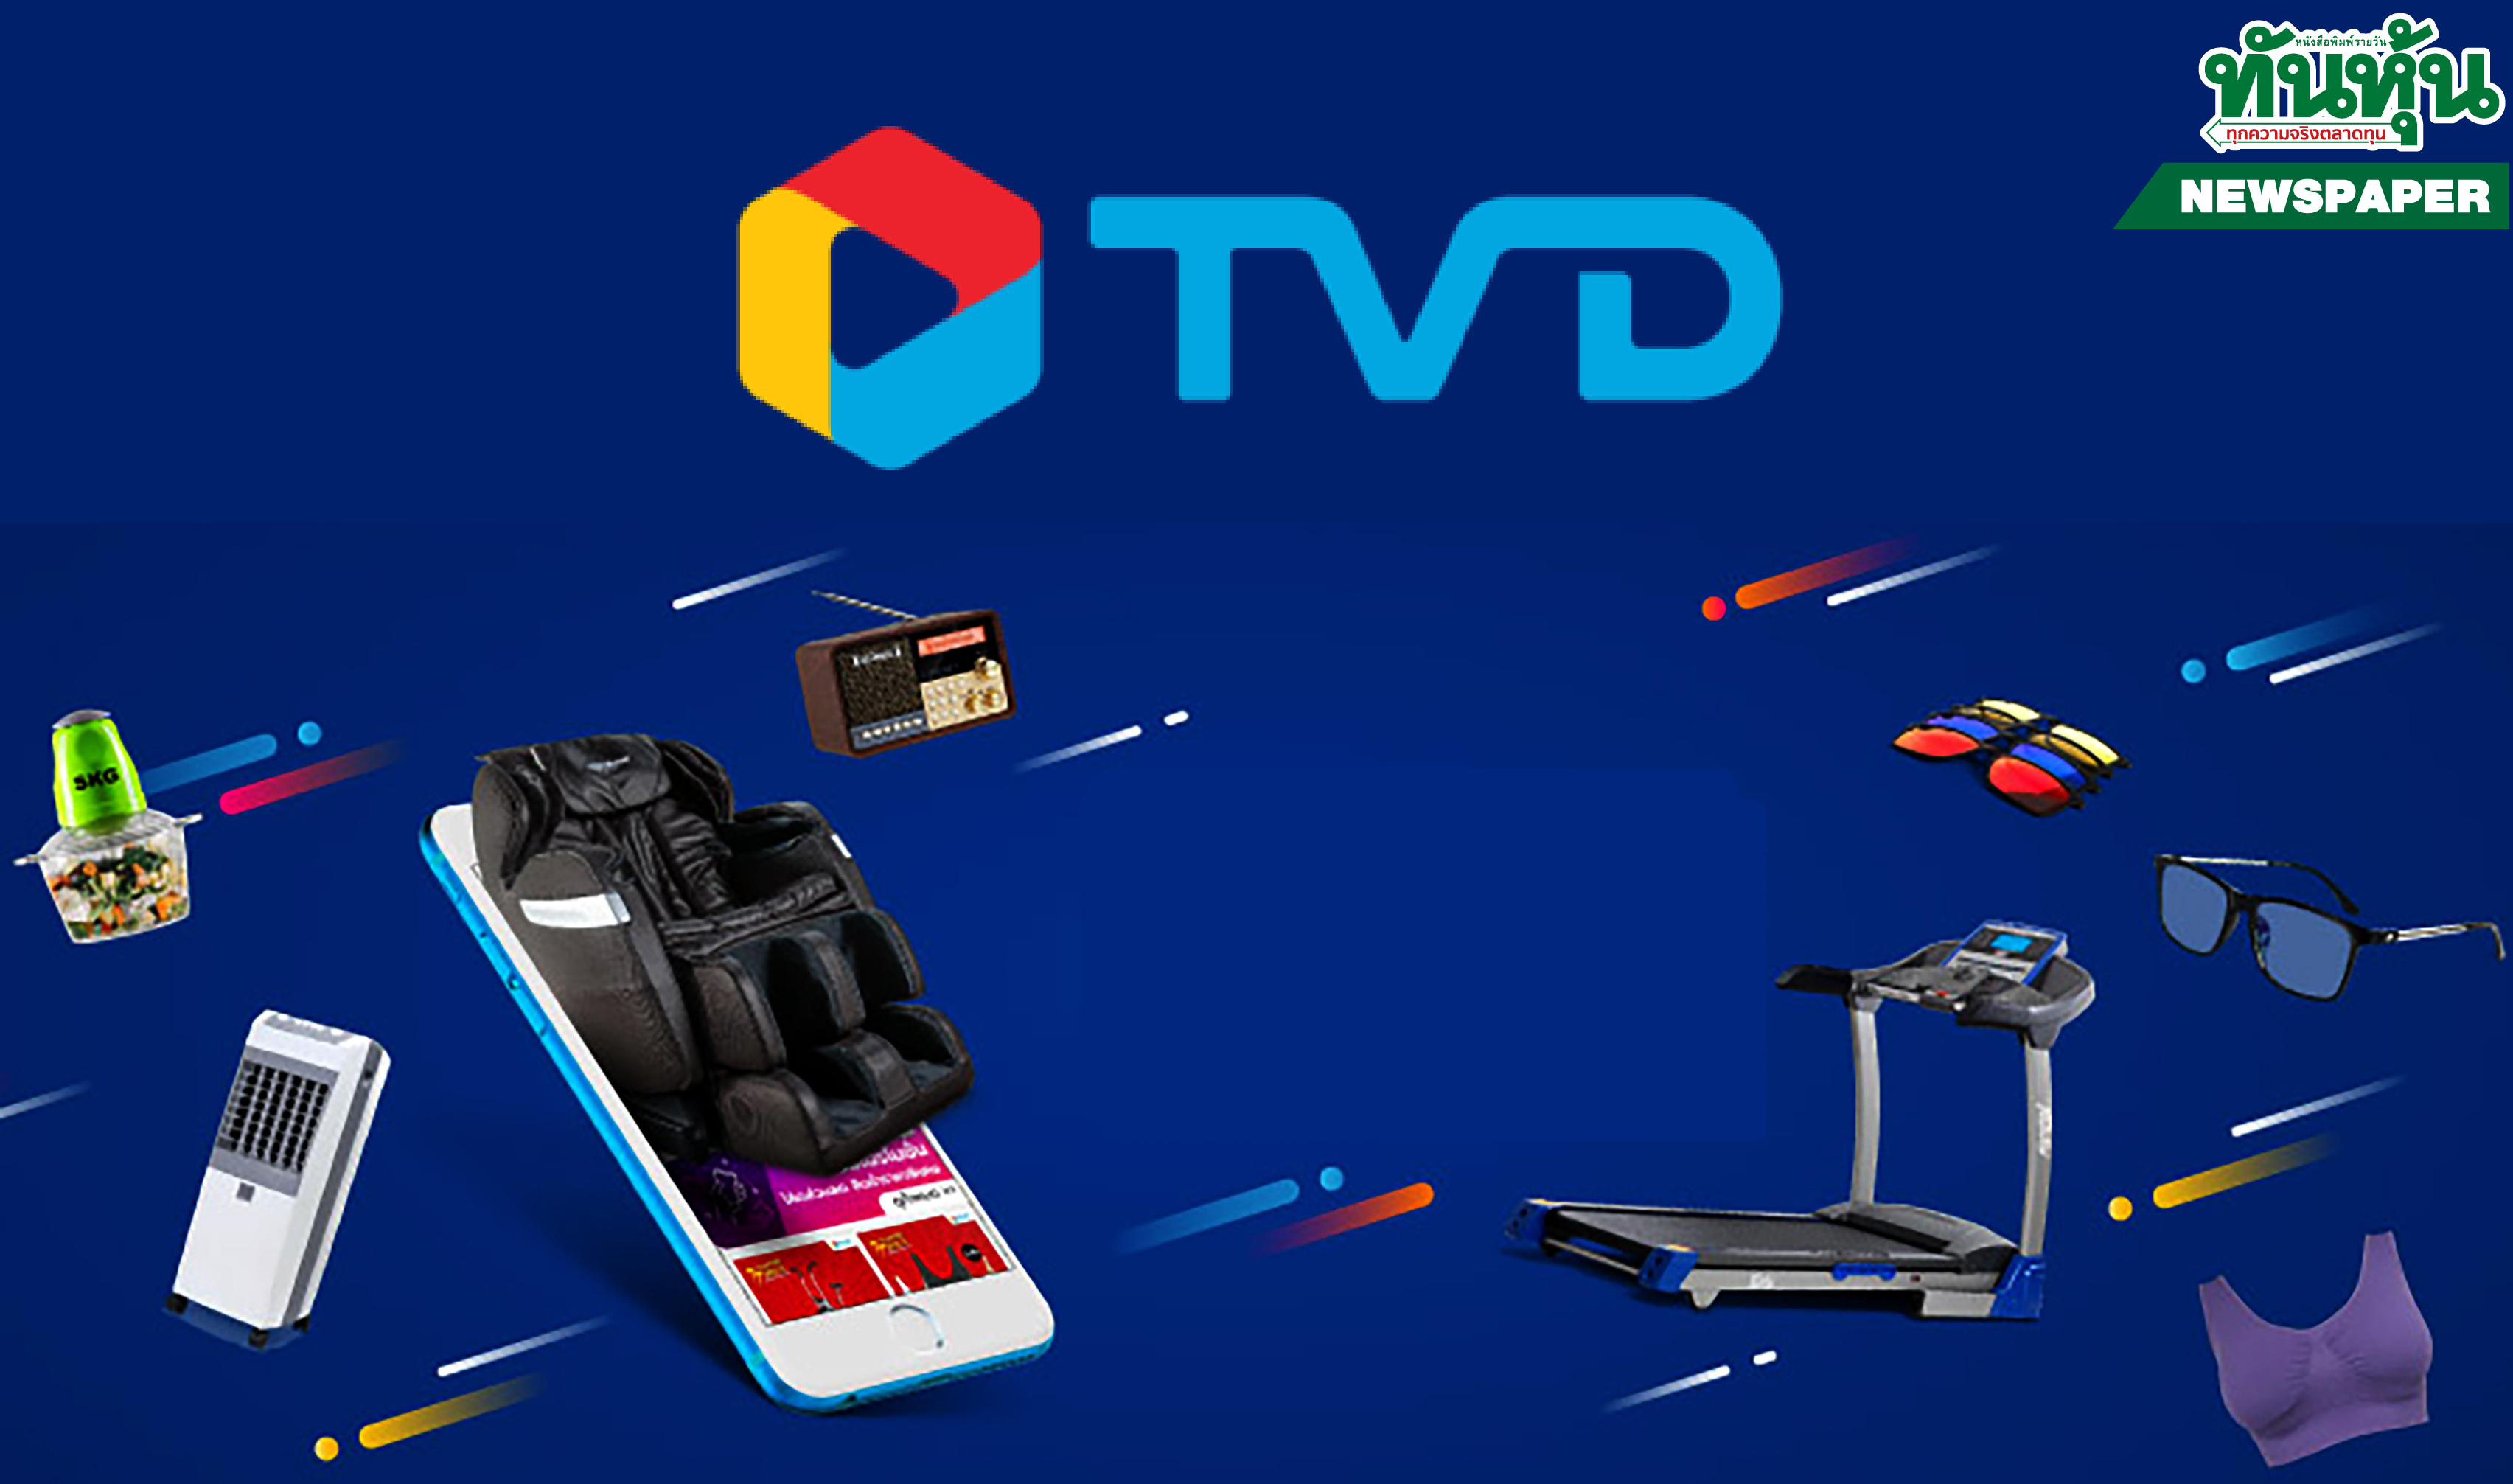 TVD บุกหนักโค้งท้าย เพิ่มไลน์สินค้าอัพยอด